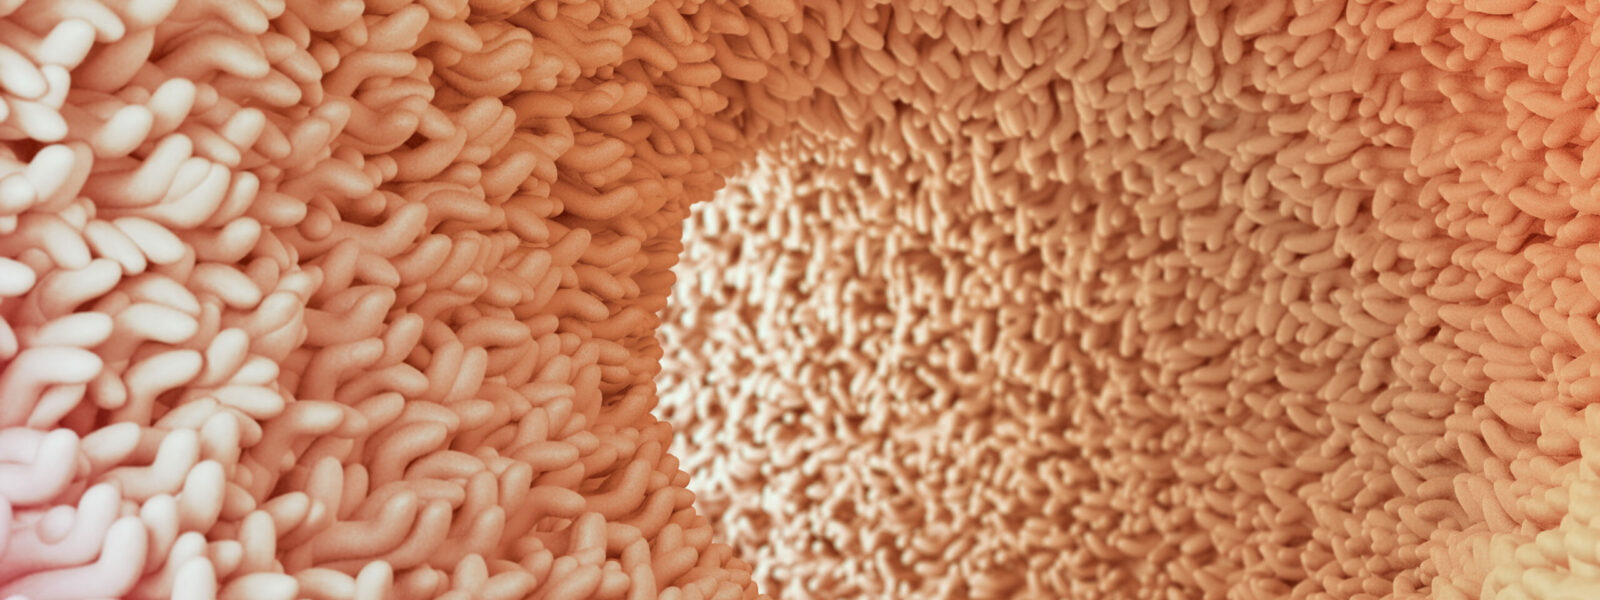 Human microbiome in intestine